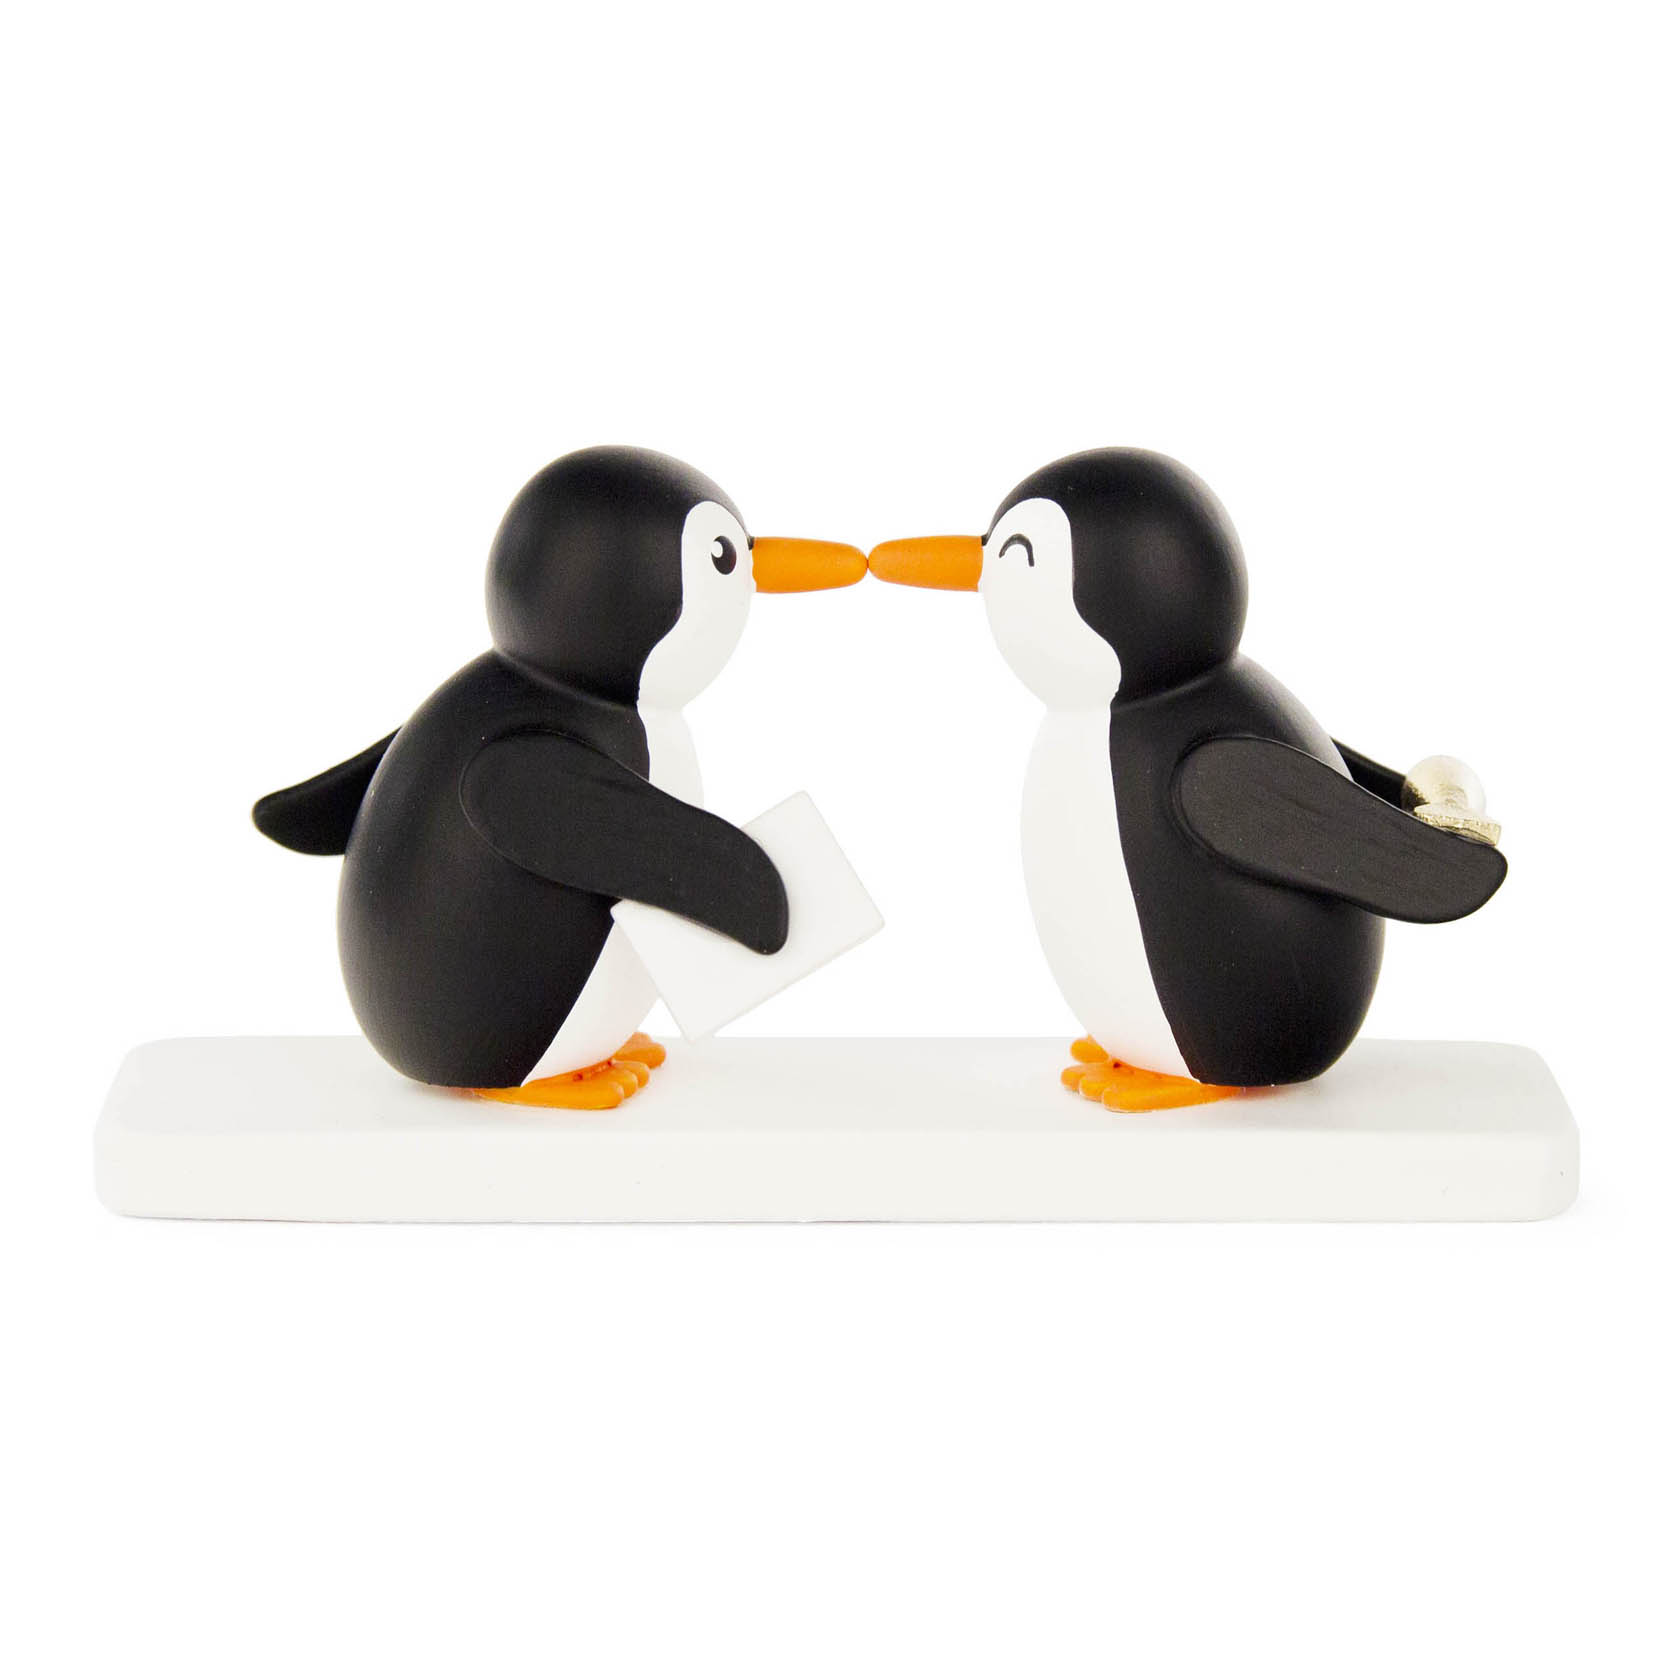 Pinguin "Techtelmechtel" im Dregeno Online Shop günstig kaufen